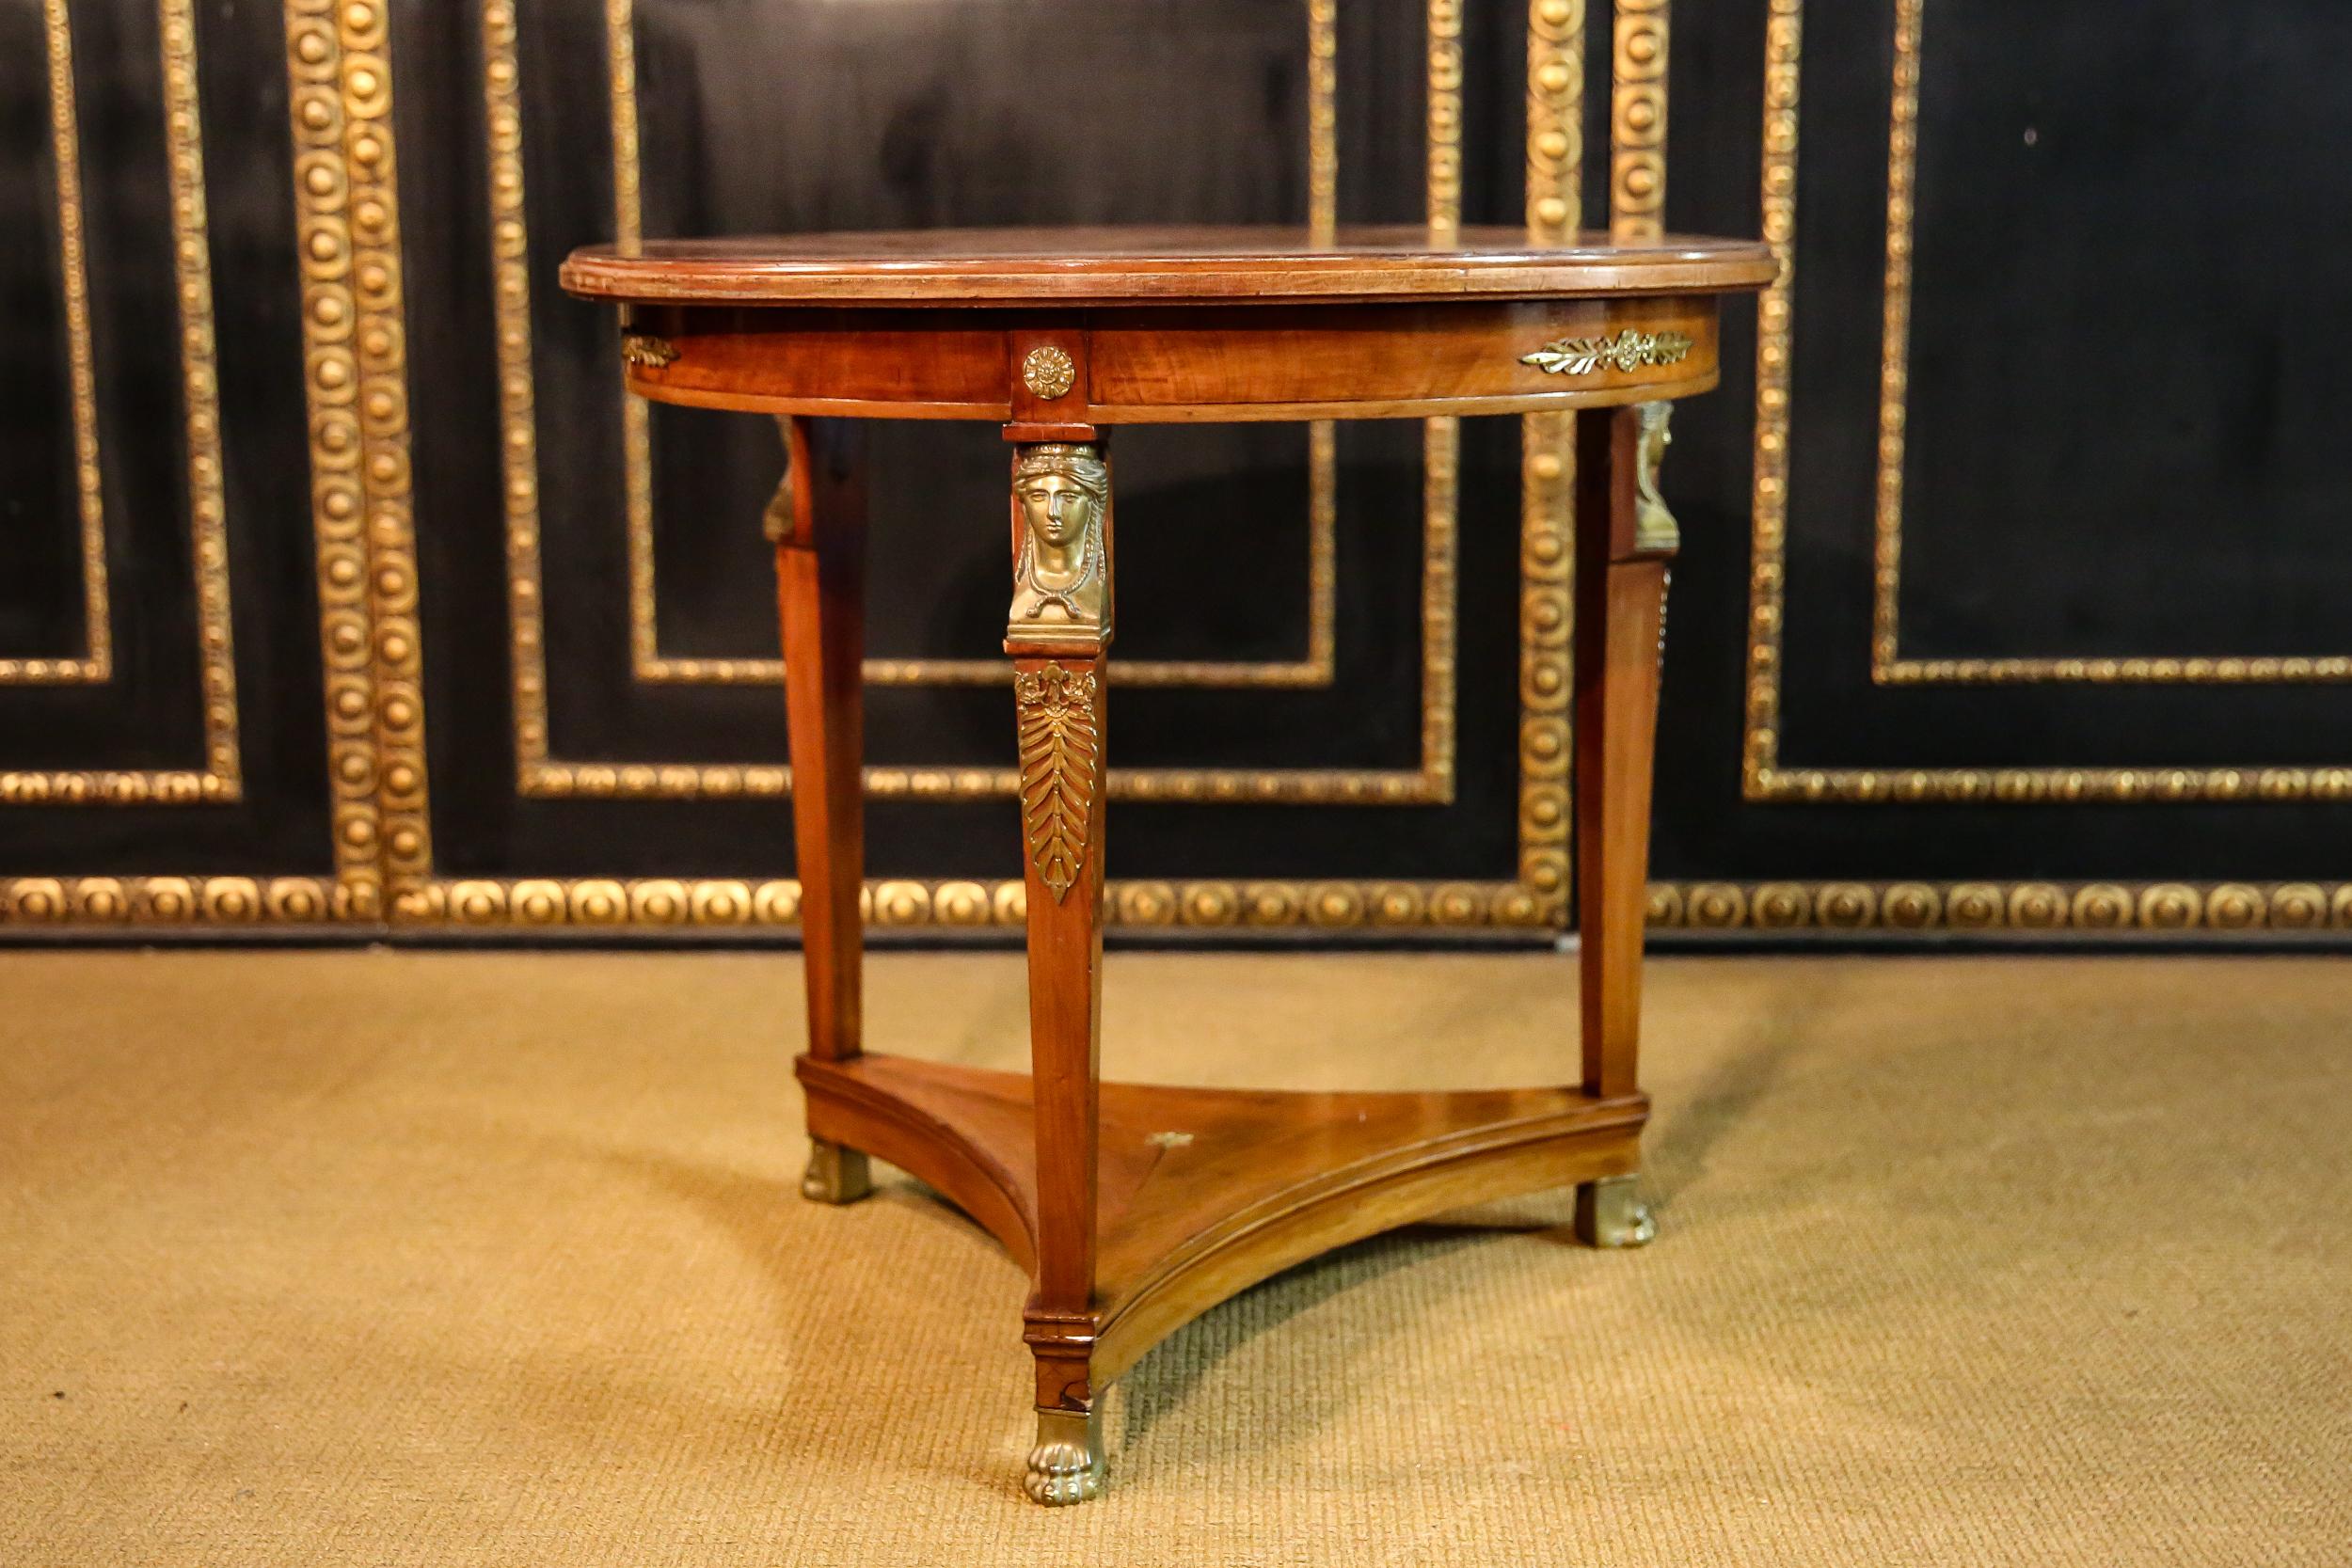 Original antique Empire Table circa 1860 - 1880 Mahogany veneer bronzed  For Sale 3